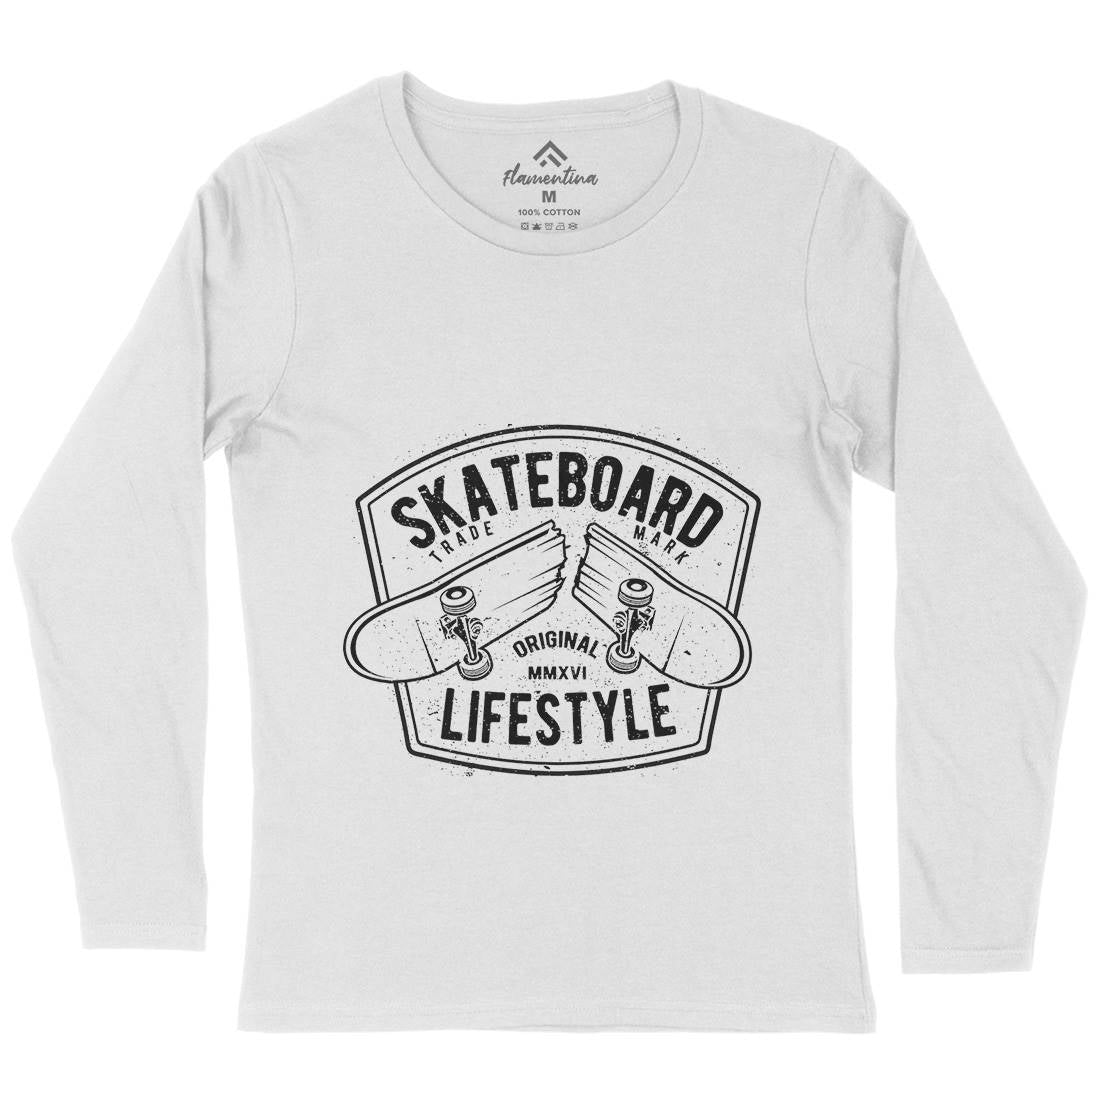 Skateboard Lifestyle Womens Long Sleeve T-Shirt Skate A145